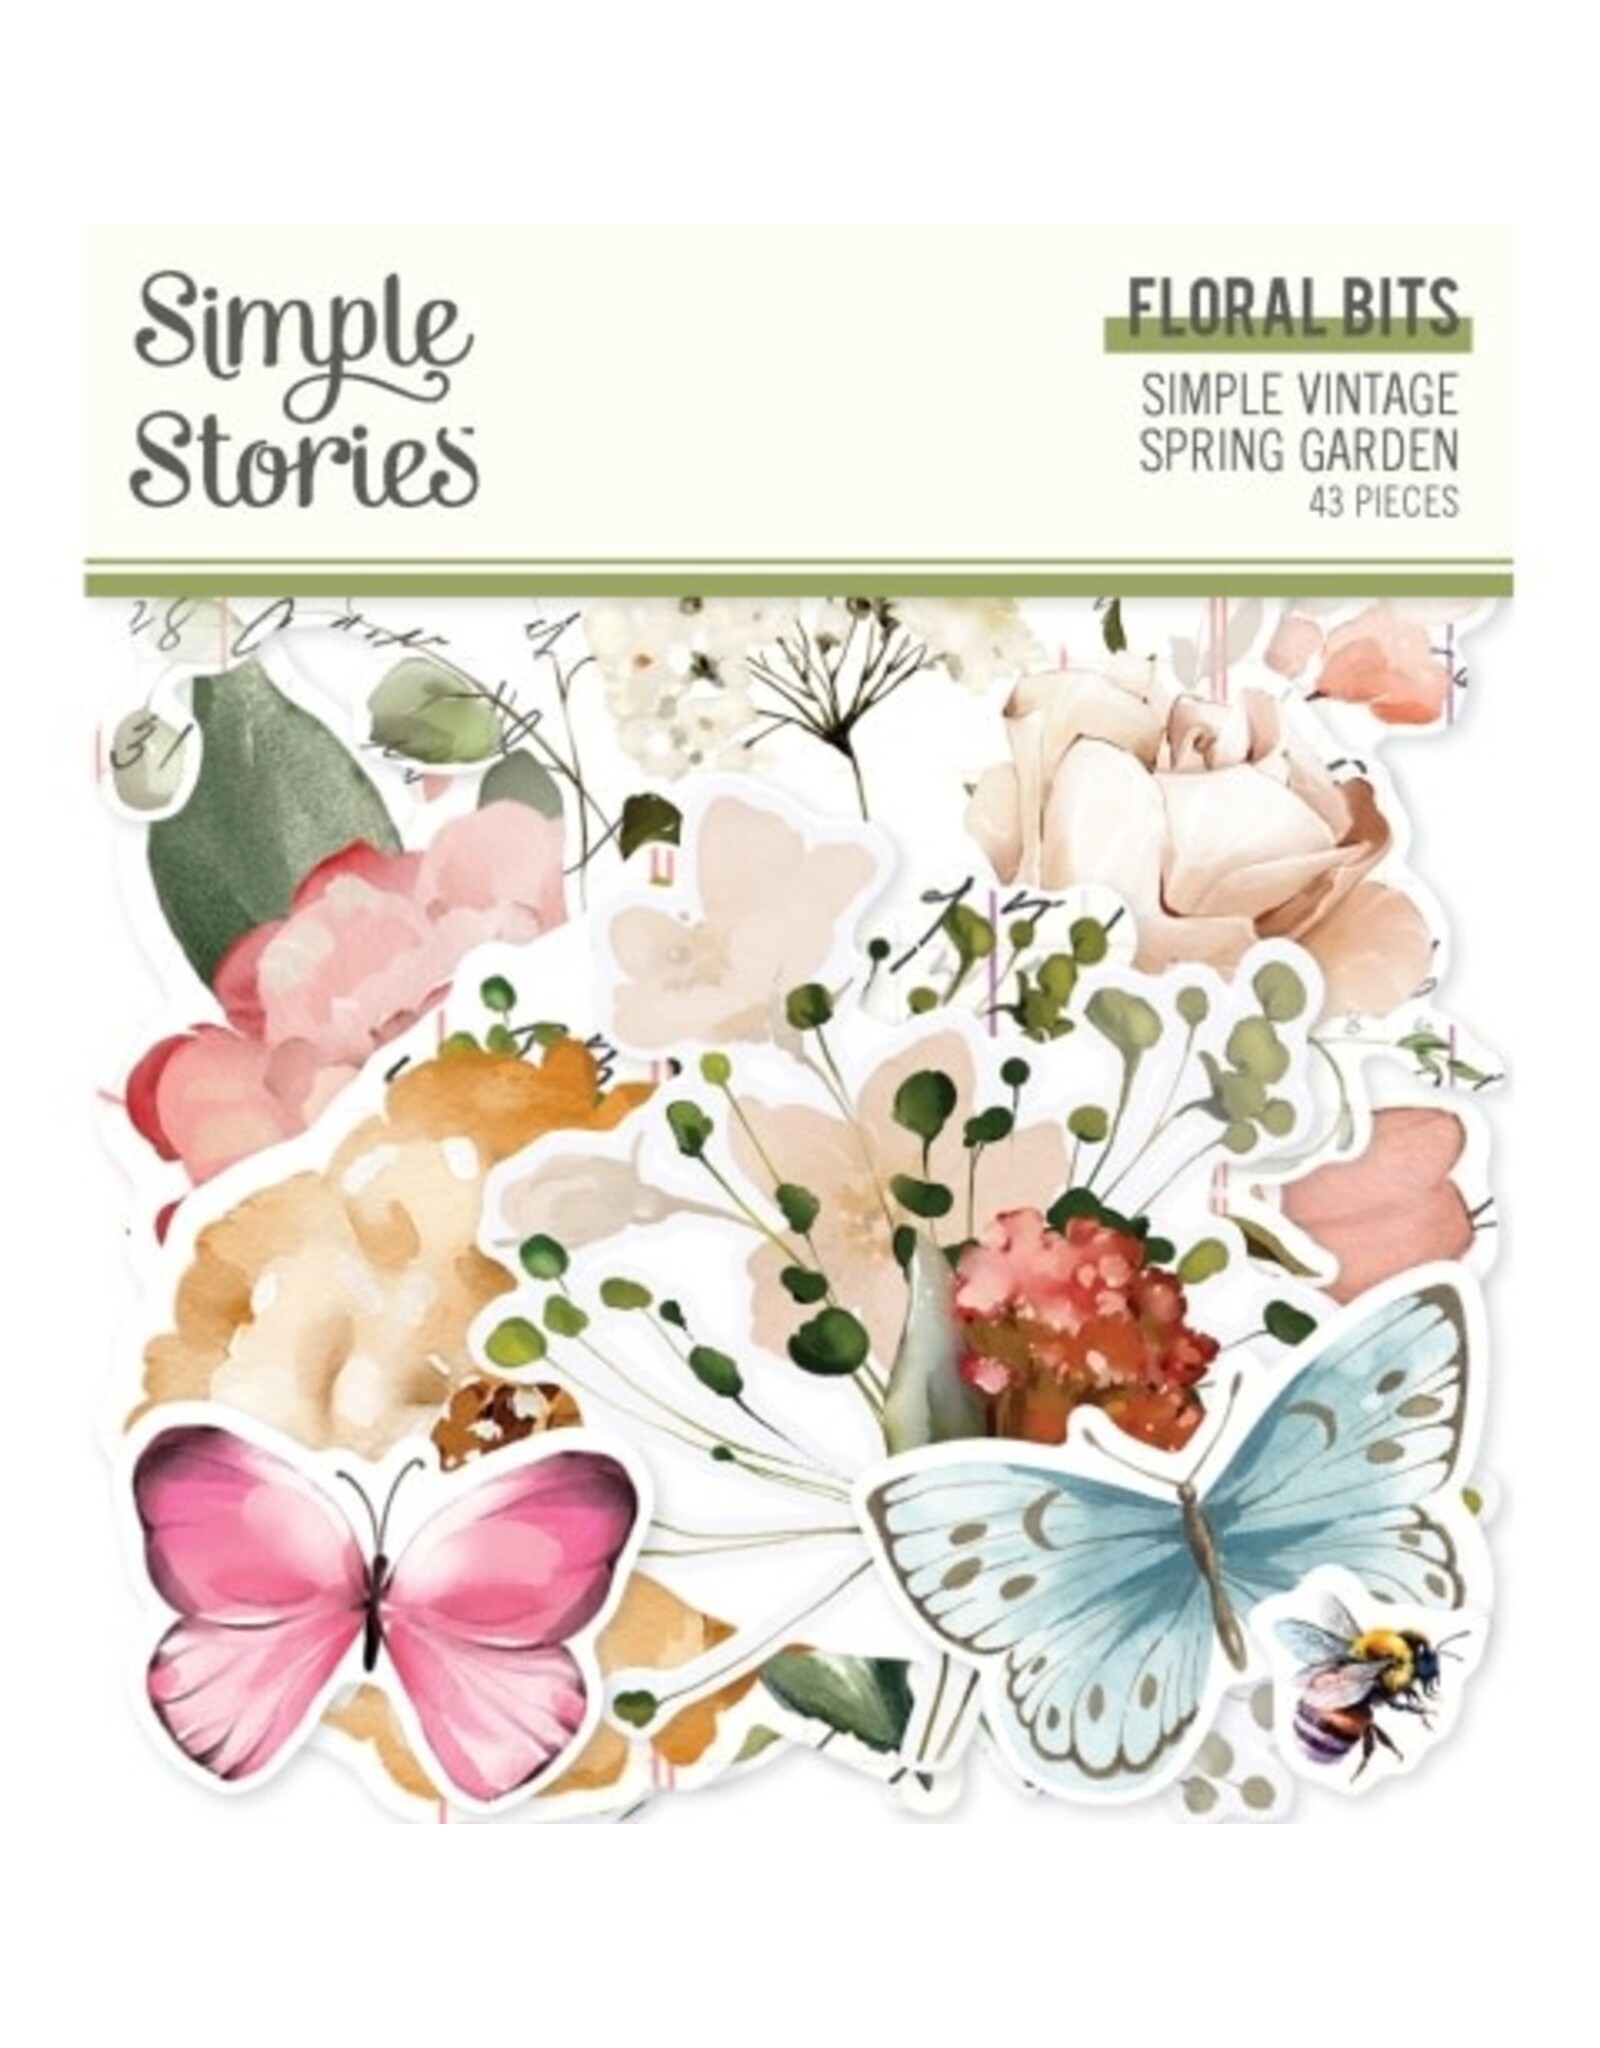 Simple Stories Simple Vintage Spring Garden - Floral Bits & Pieces